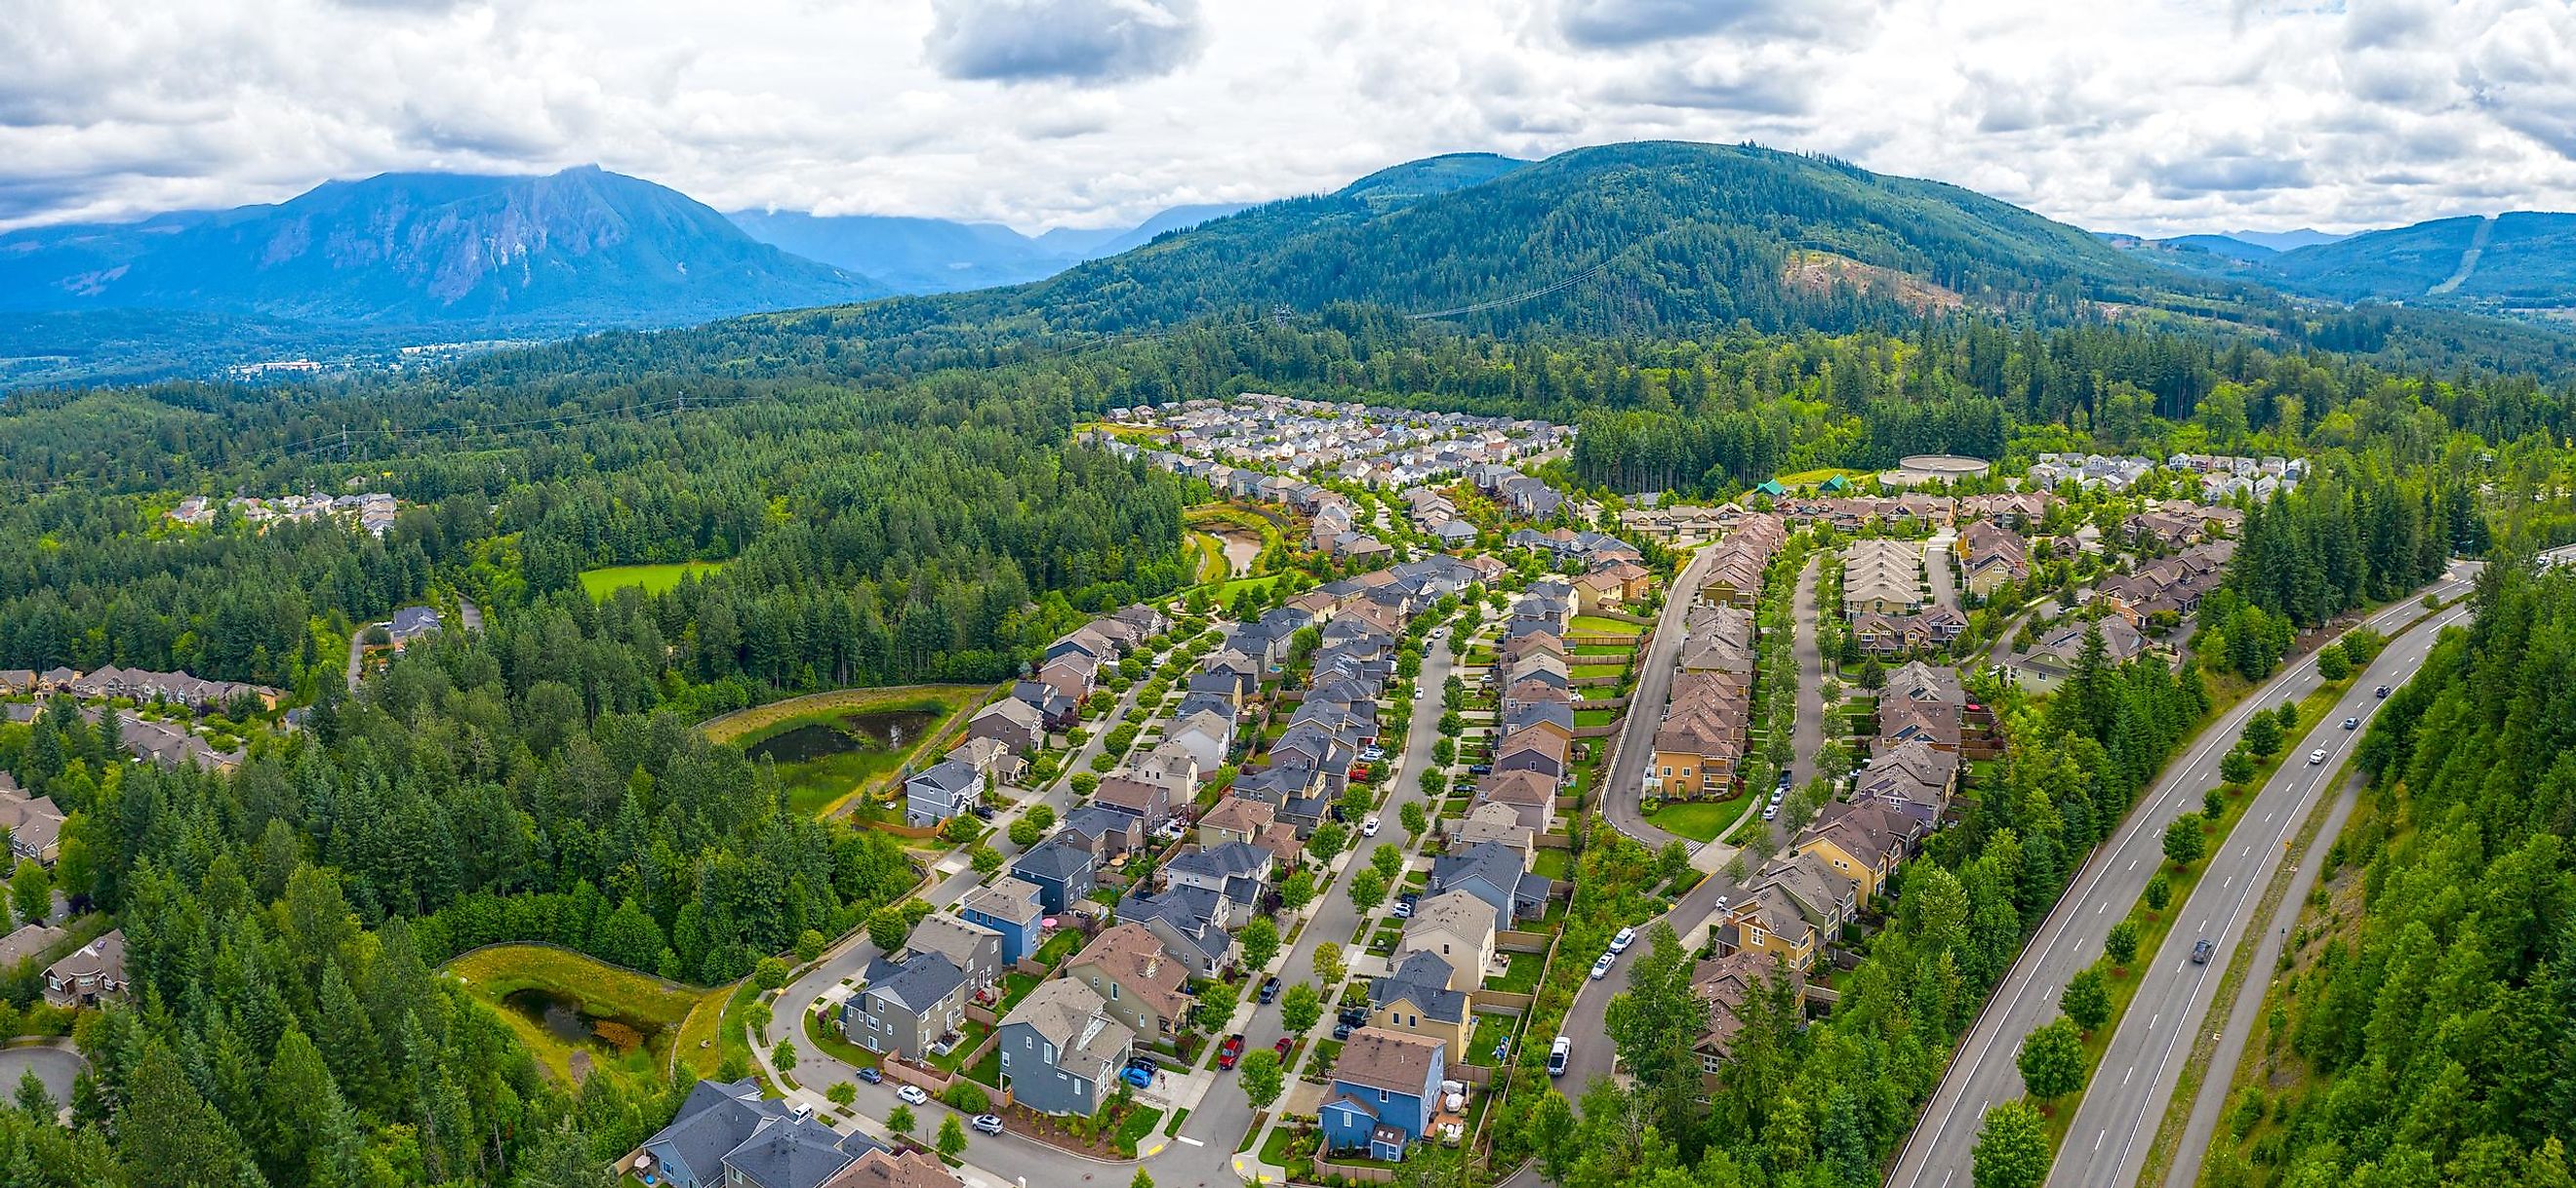 Snoqualmie Ridge, Washington, USA - Aerial overview of suburban neighborhood and forest community housing development. 